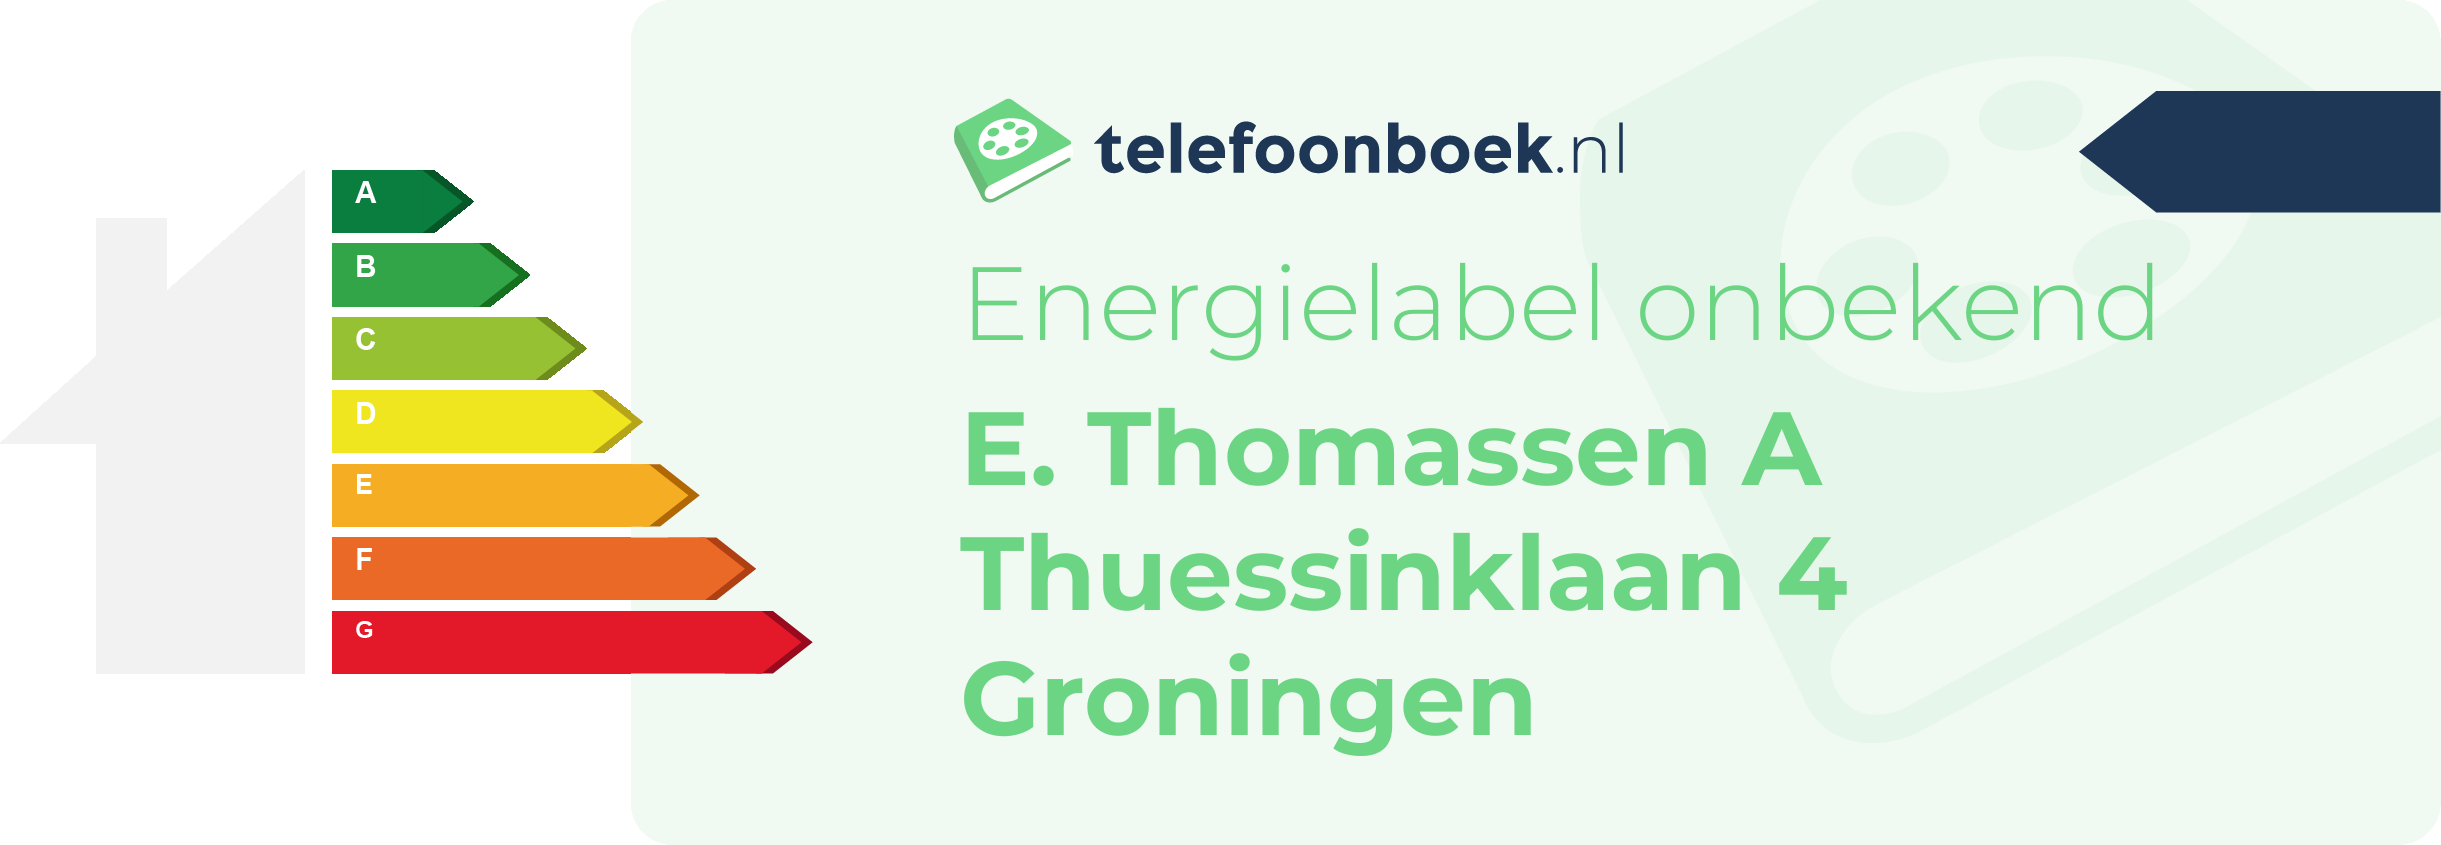 Energielabel E. Thomassen A Thuessinklaan 4 Groningen